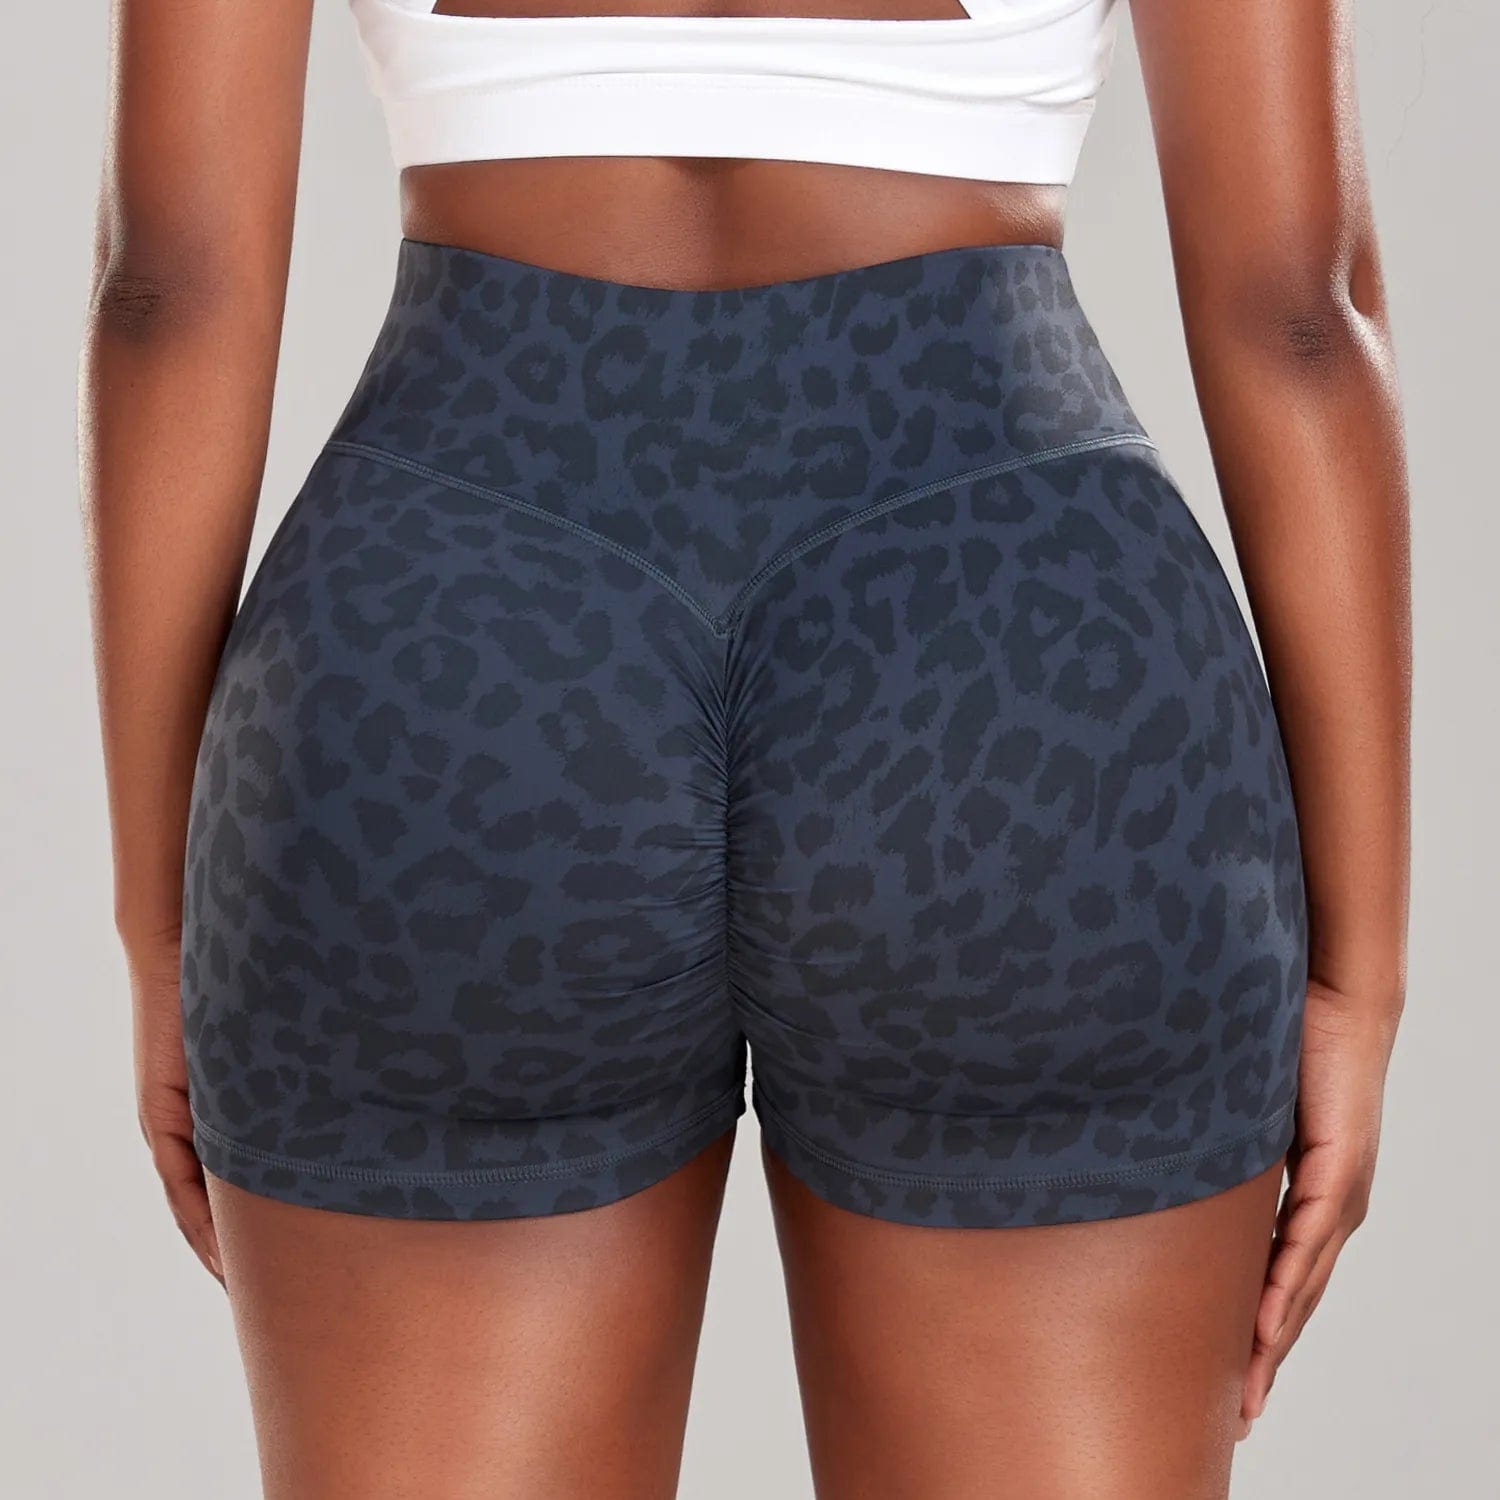 Leopard clothing Leopard spandex shorts